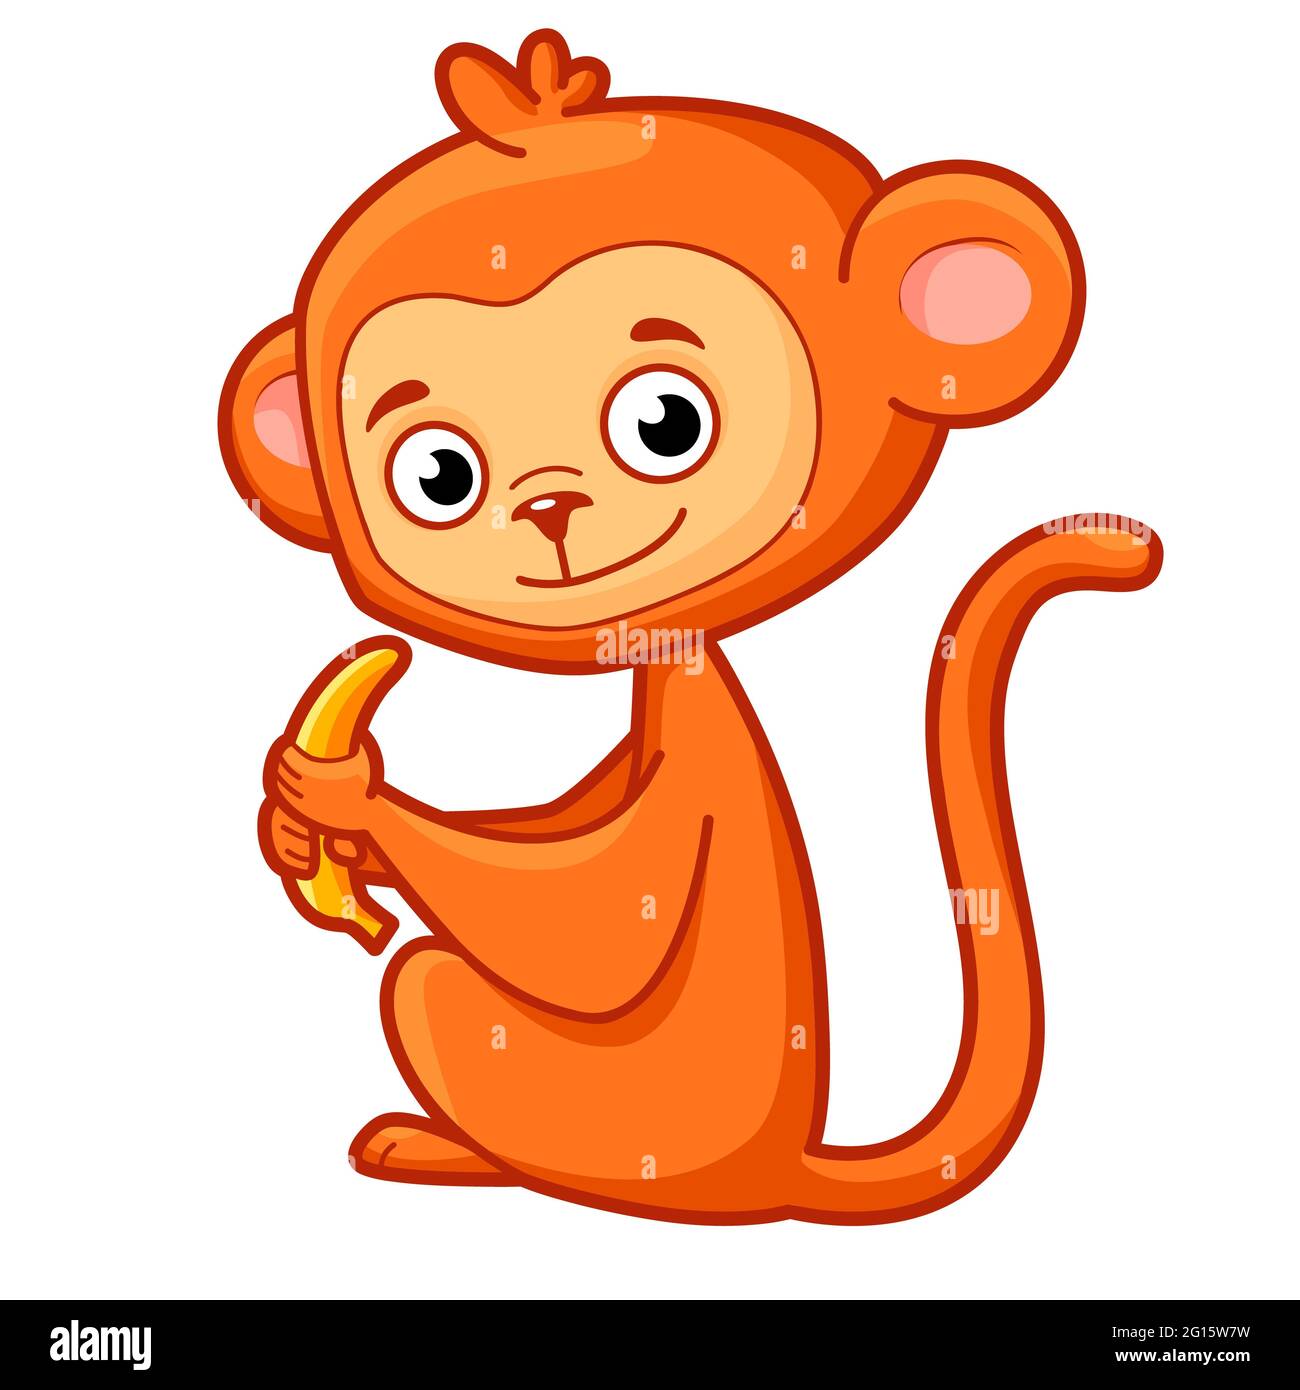 Cute monkey cartoon. Monkey clipart illustration Stock Photo - Alamy